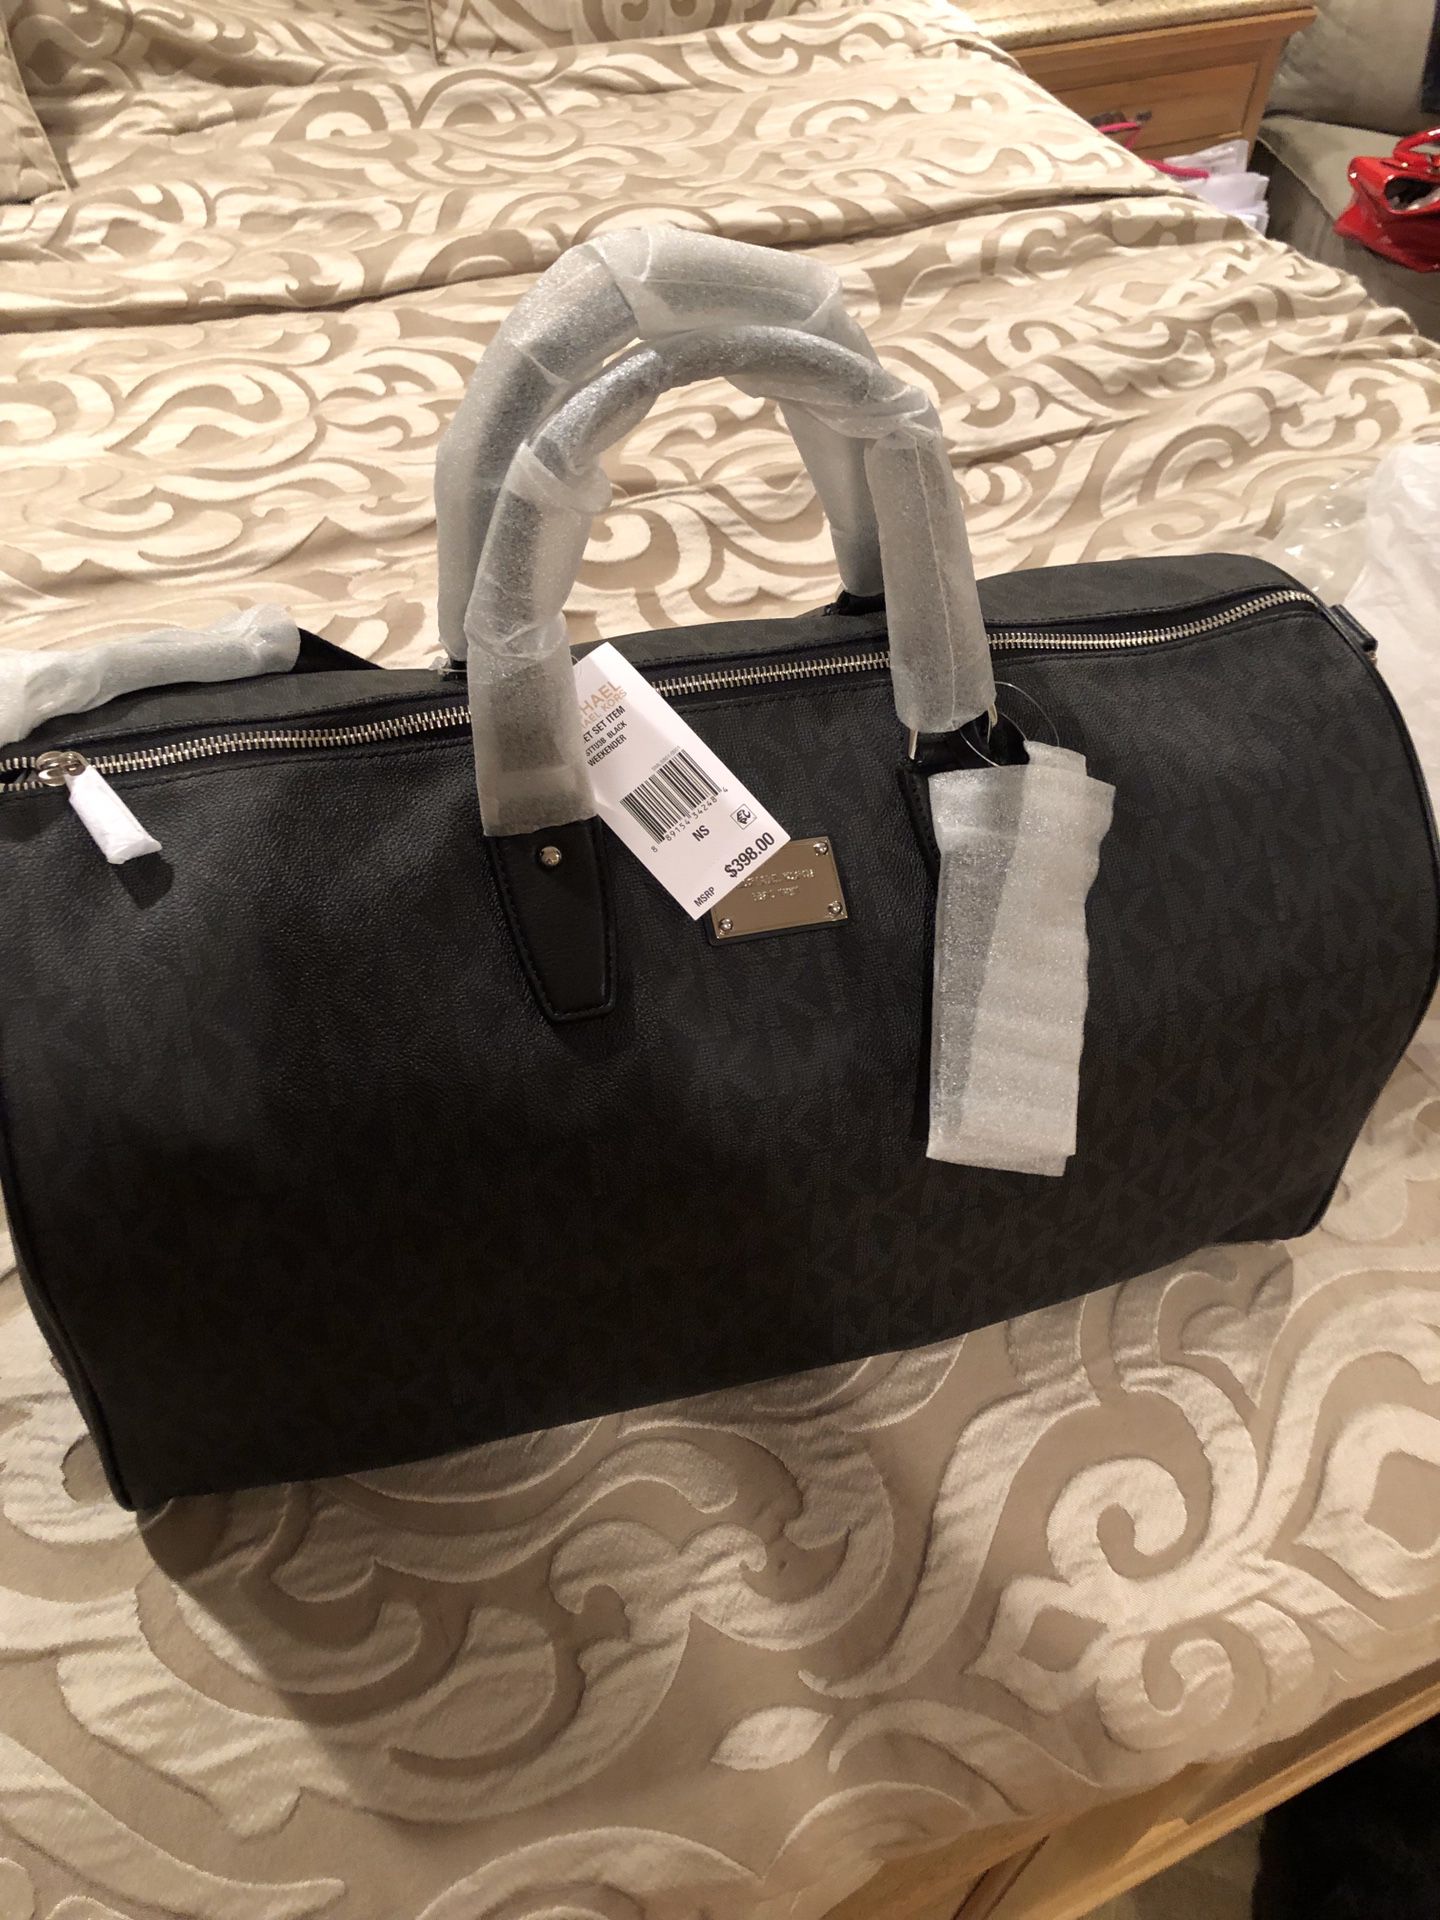 Brand new Michael kors travel bag